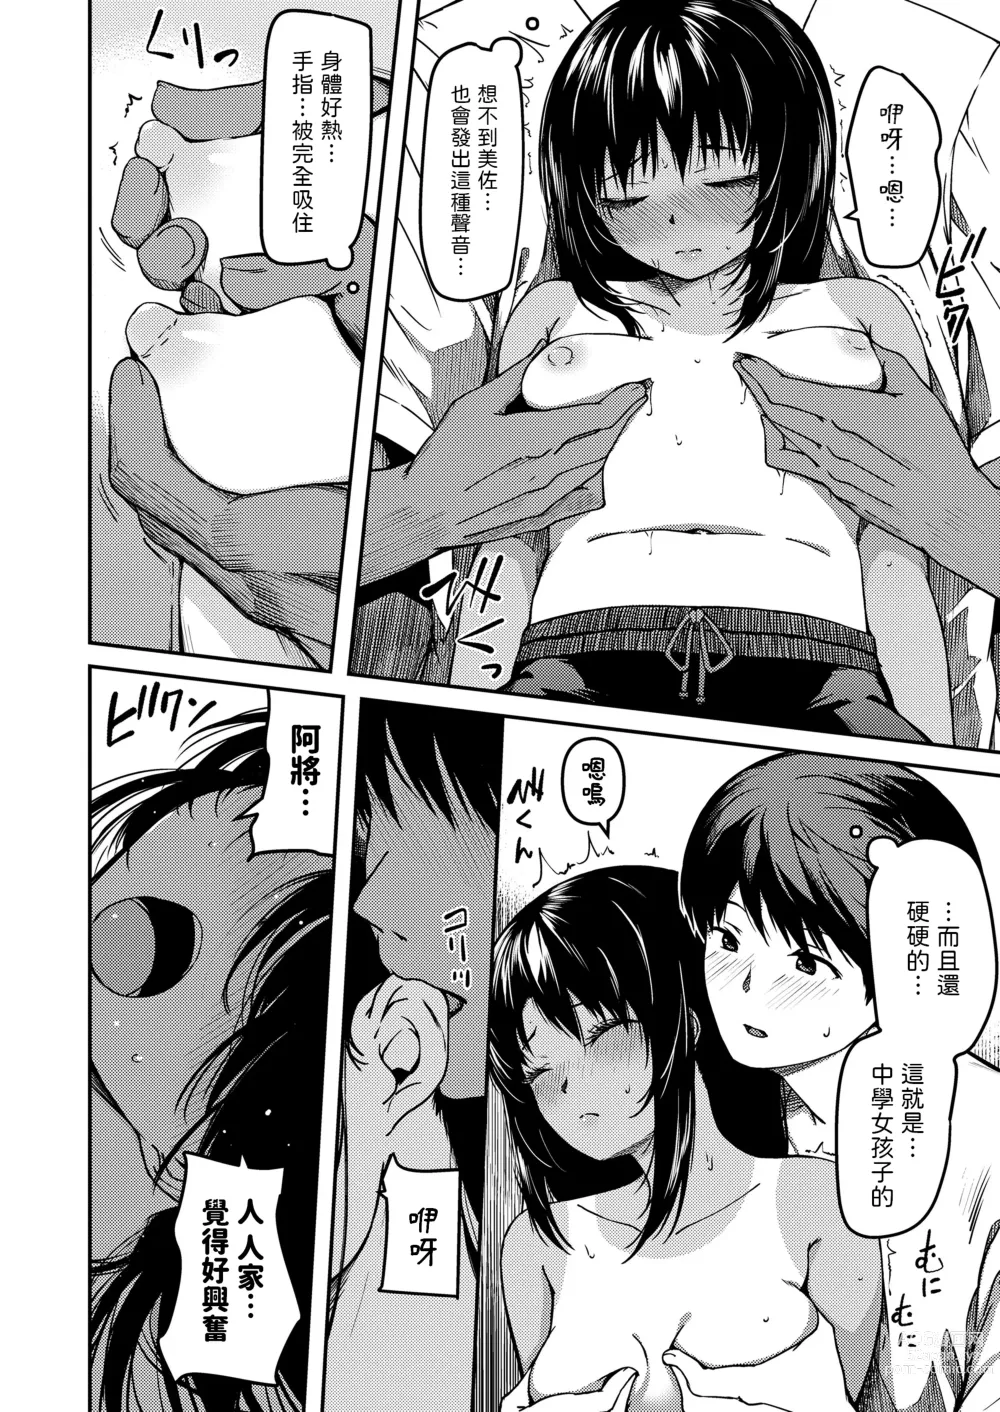 Page 8 of manga Inaka de Hisabisa ni Au Itoko